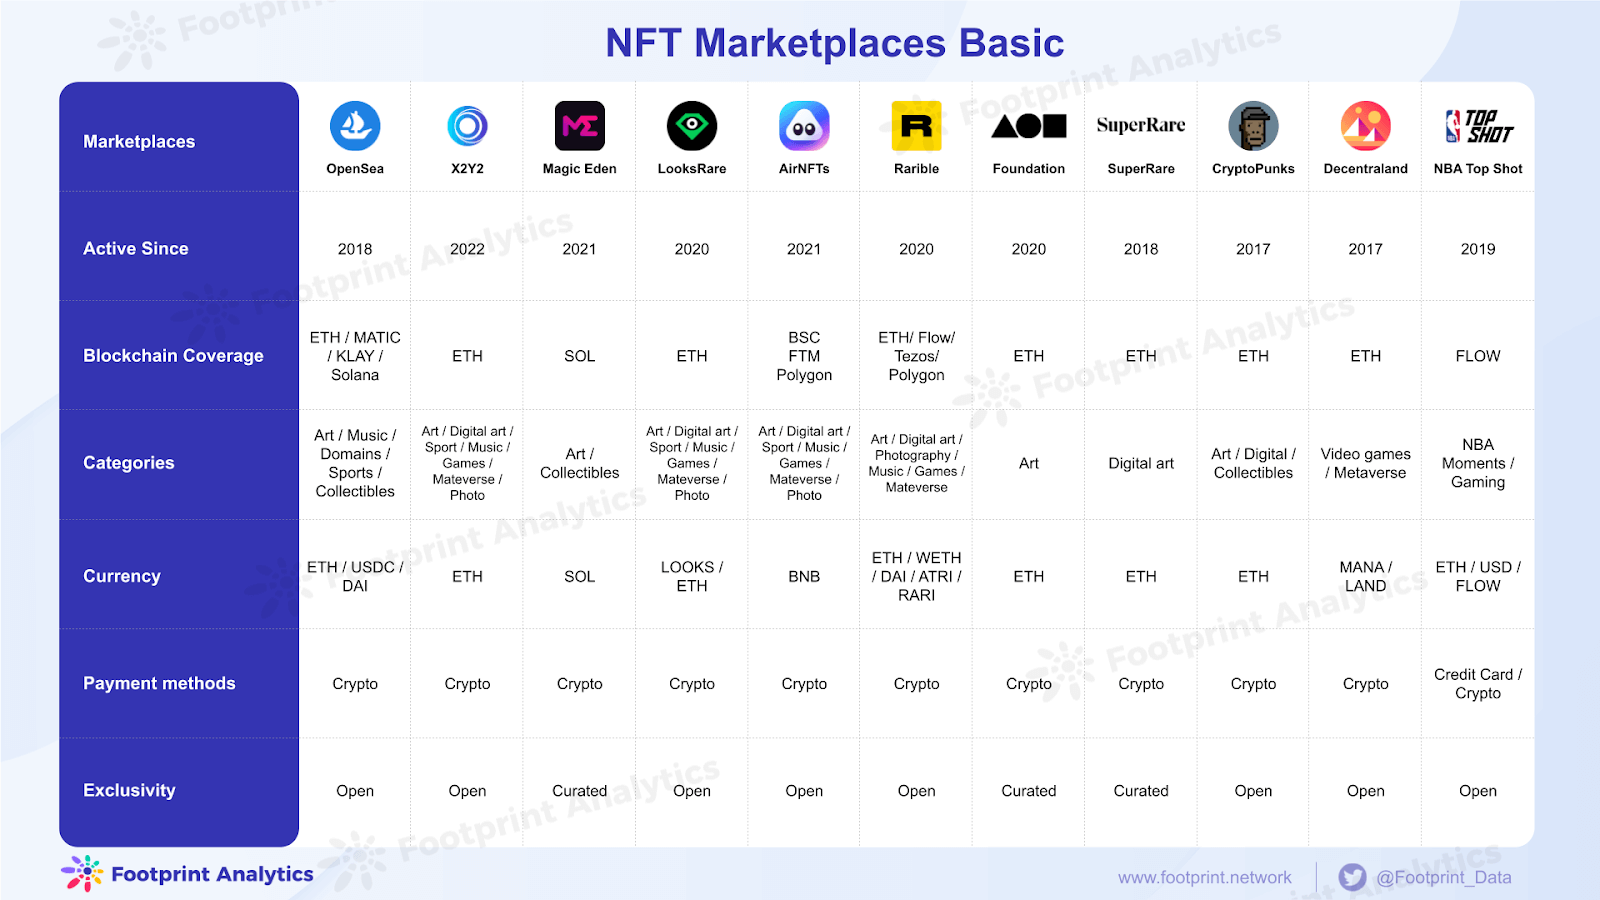 Footprint Analysis - NFT Marketplace Basic